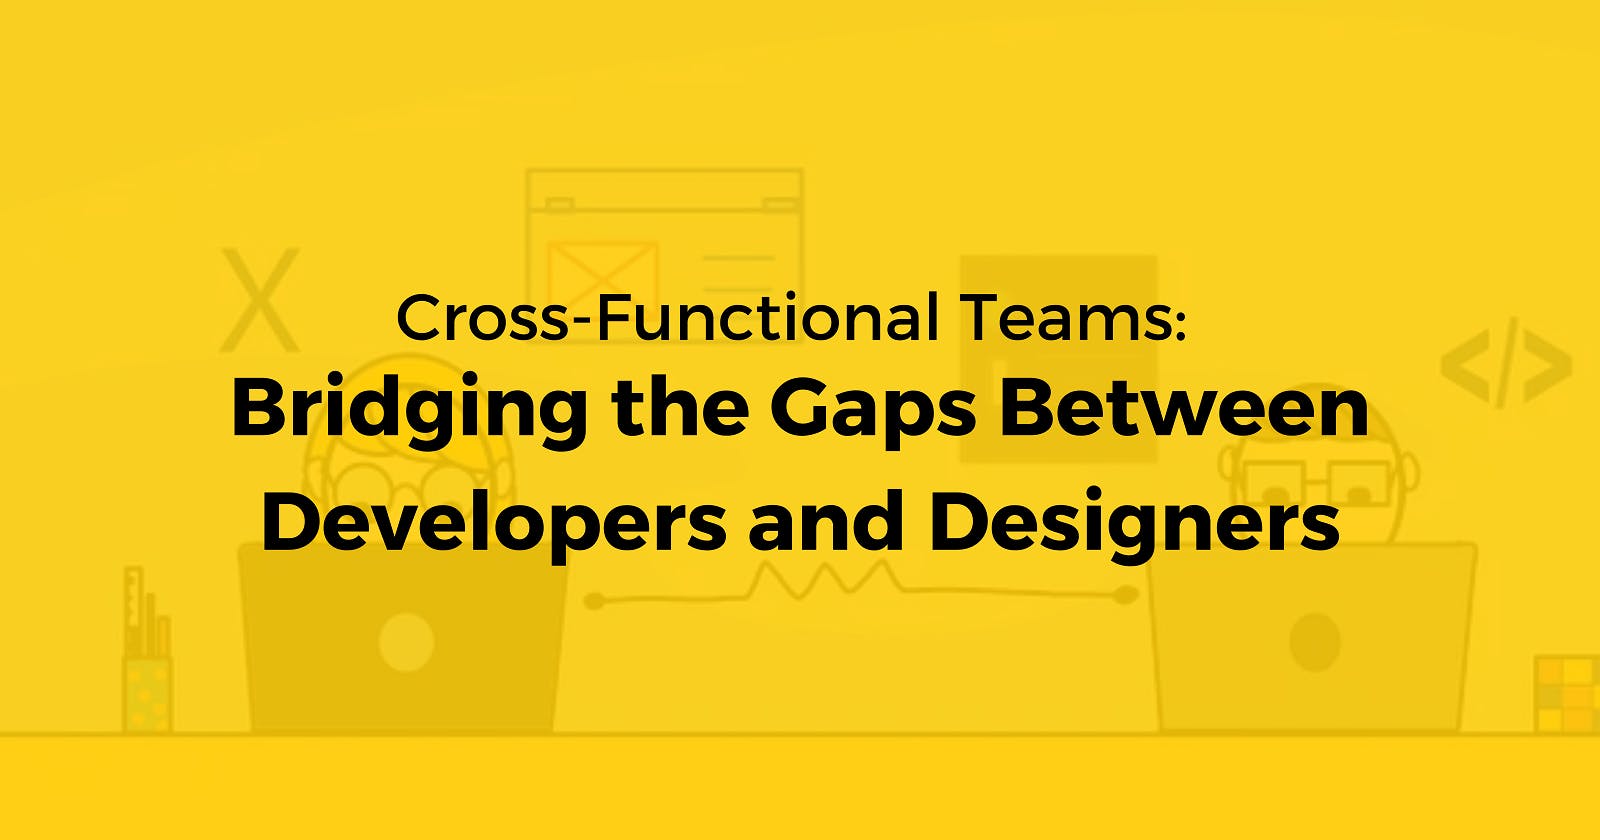 Cross-Functional Teams: Bridging the Gaps Between Developers and Designers